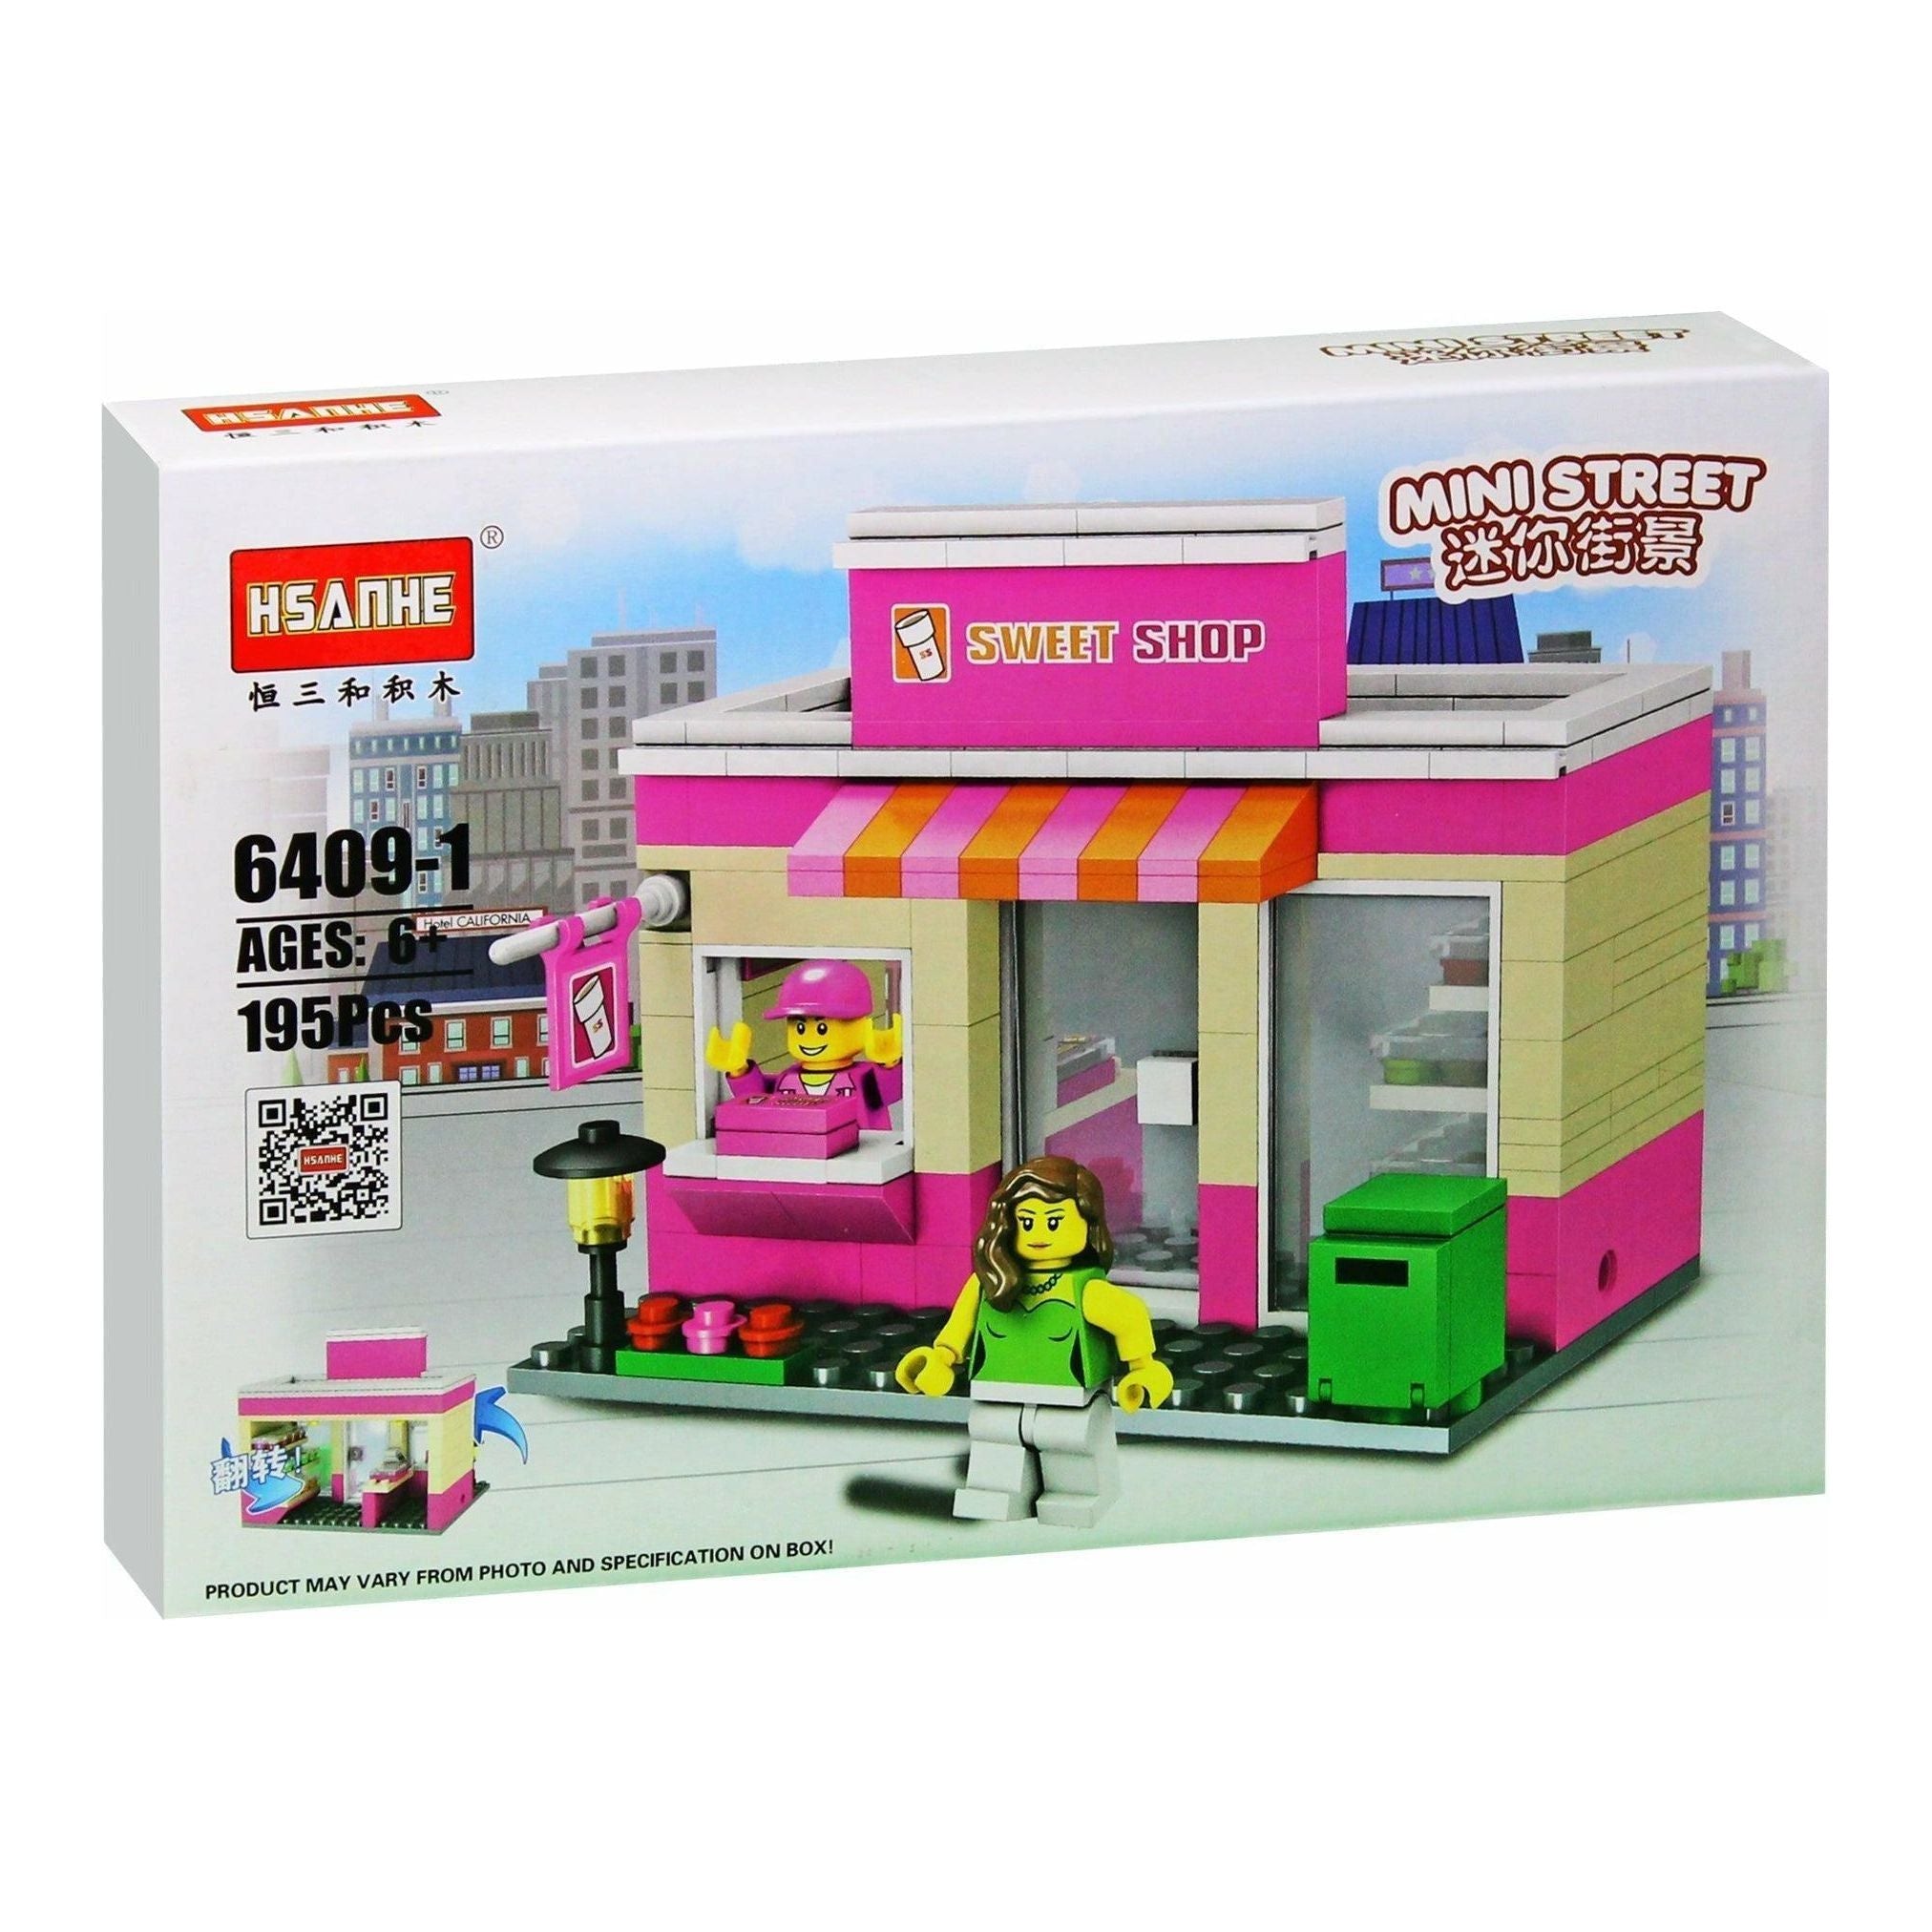 Hsanhe 64091 Mini Street Sweet Shop Building Blocks (195 Pieces) - BumbleToys - 5-7 Years, 6+ Years, Boys, Building Blocks, Building Sets & Blocks, Girls, LEGO, Toy House